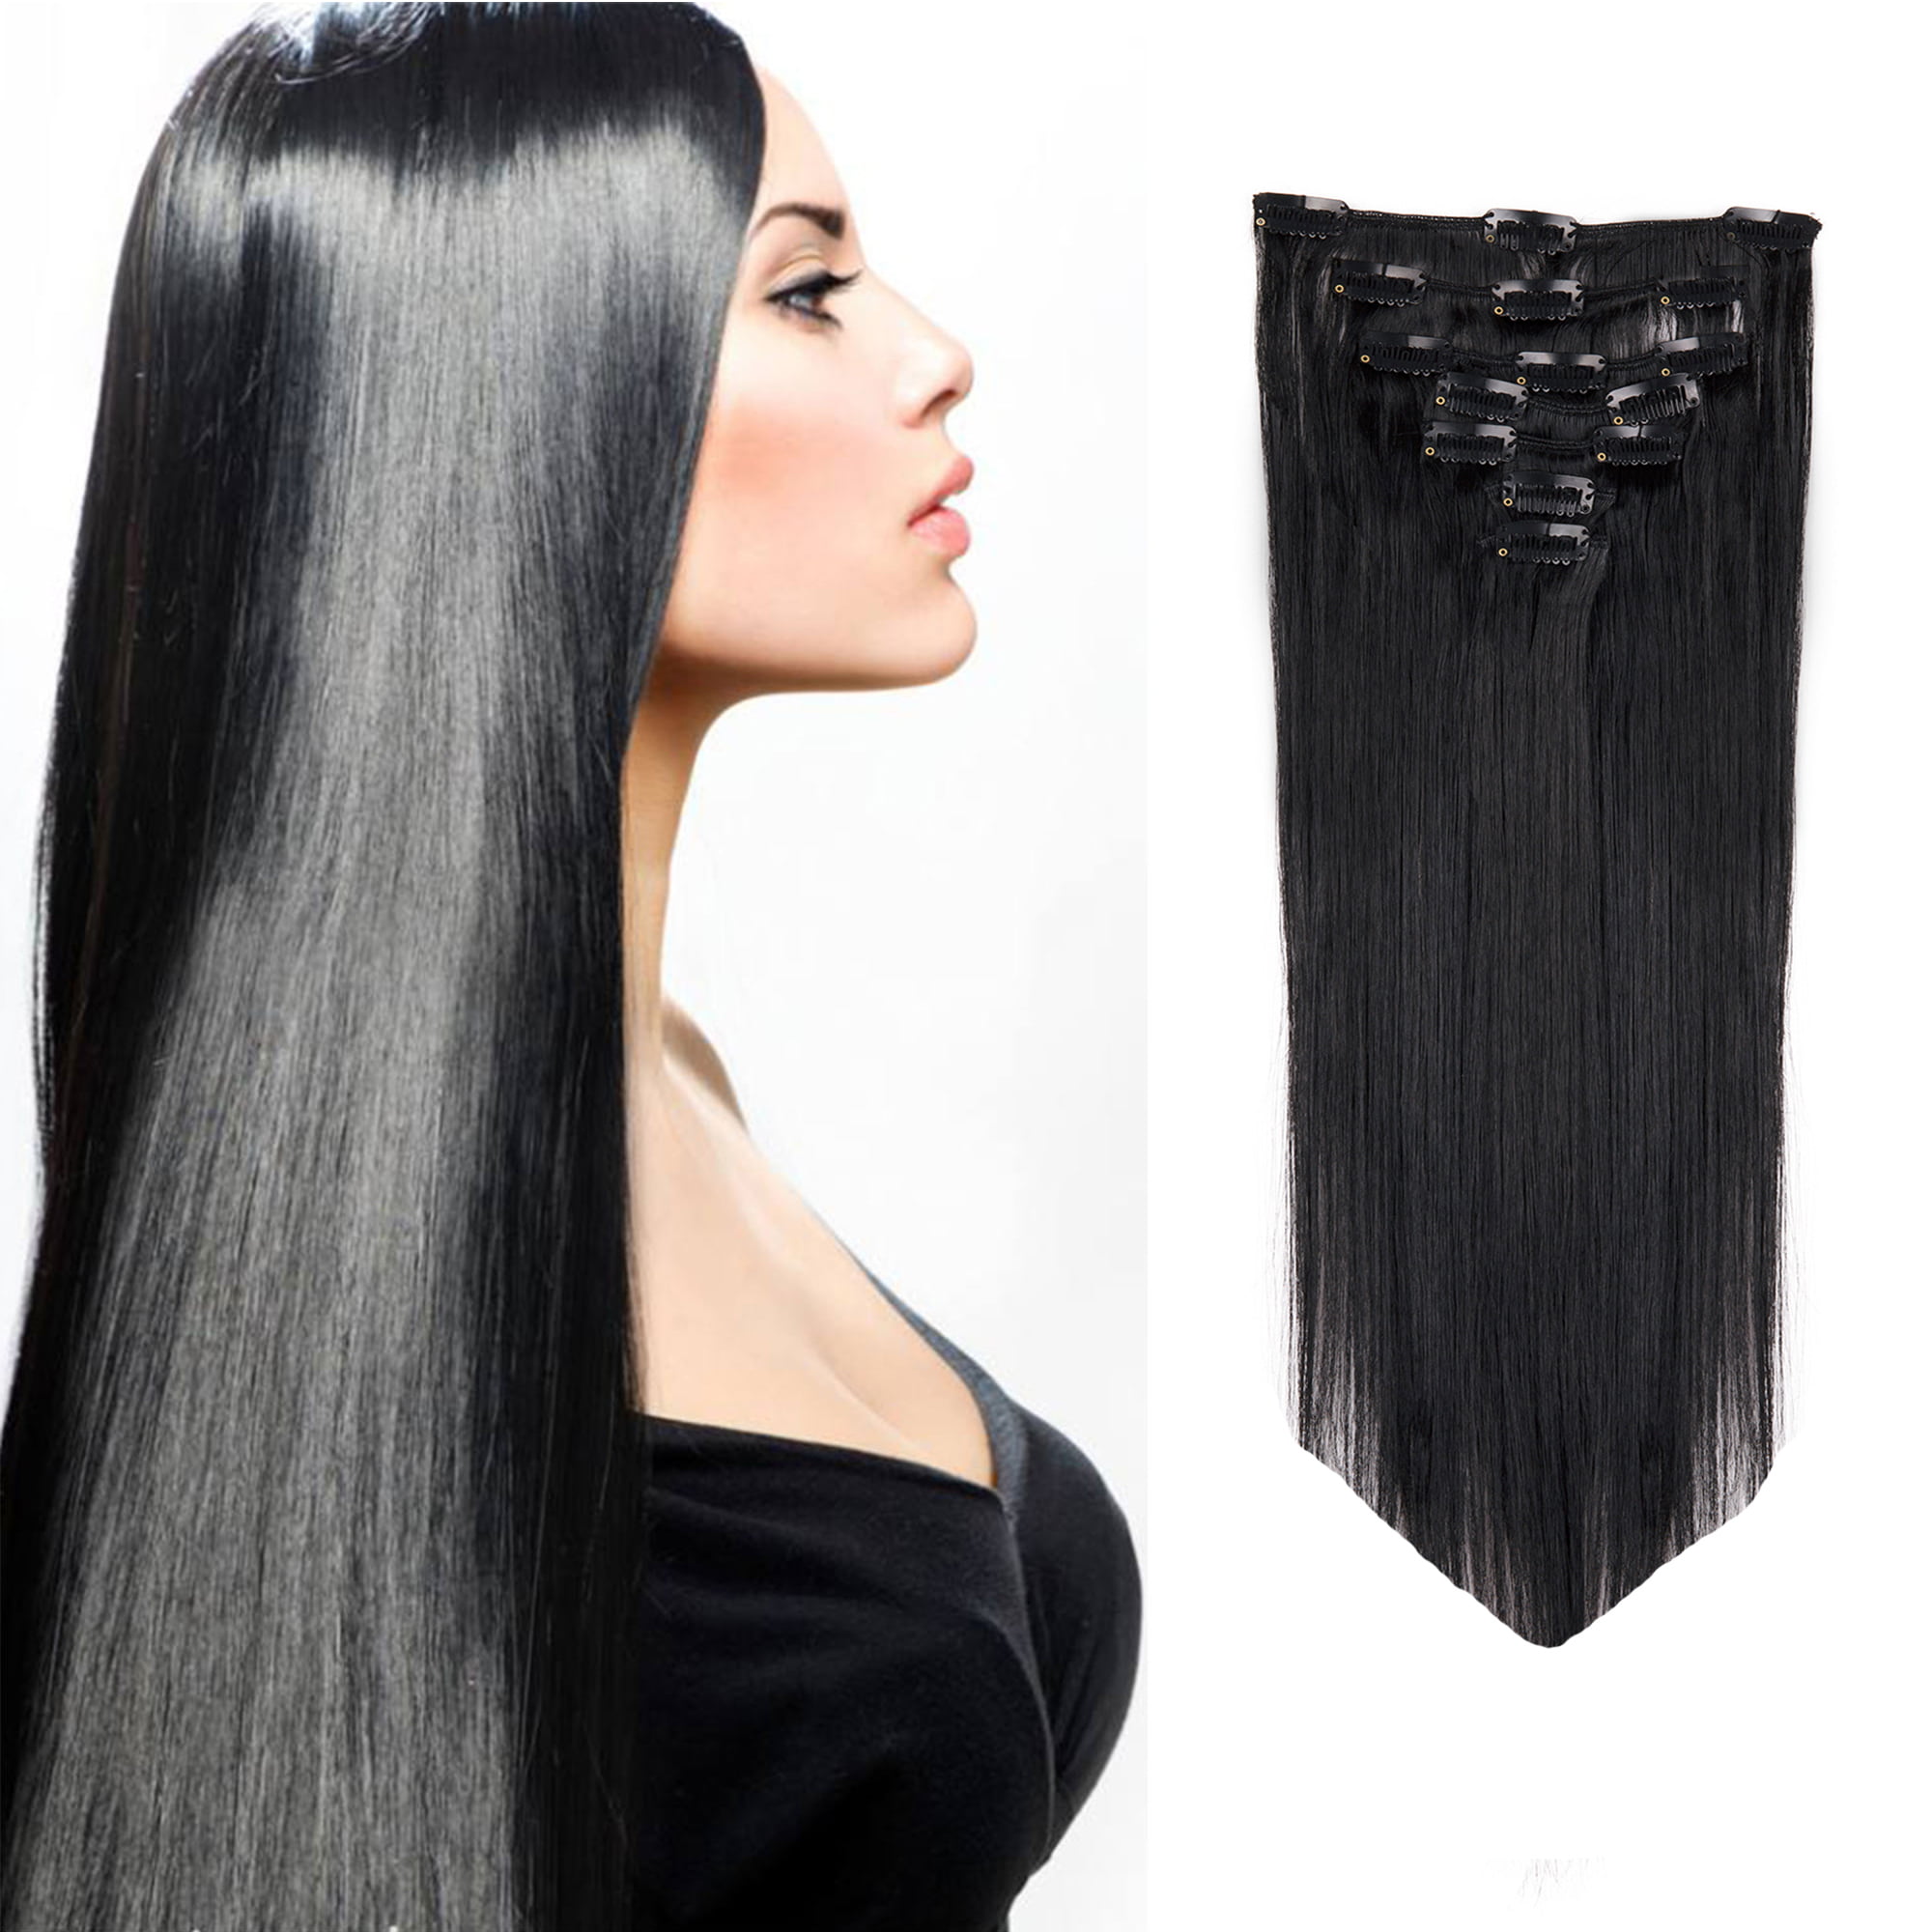 human hair extensions in black